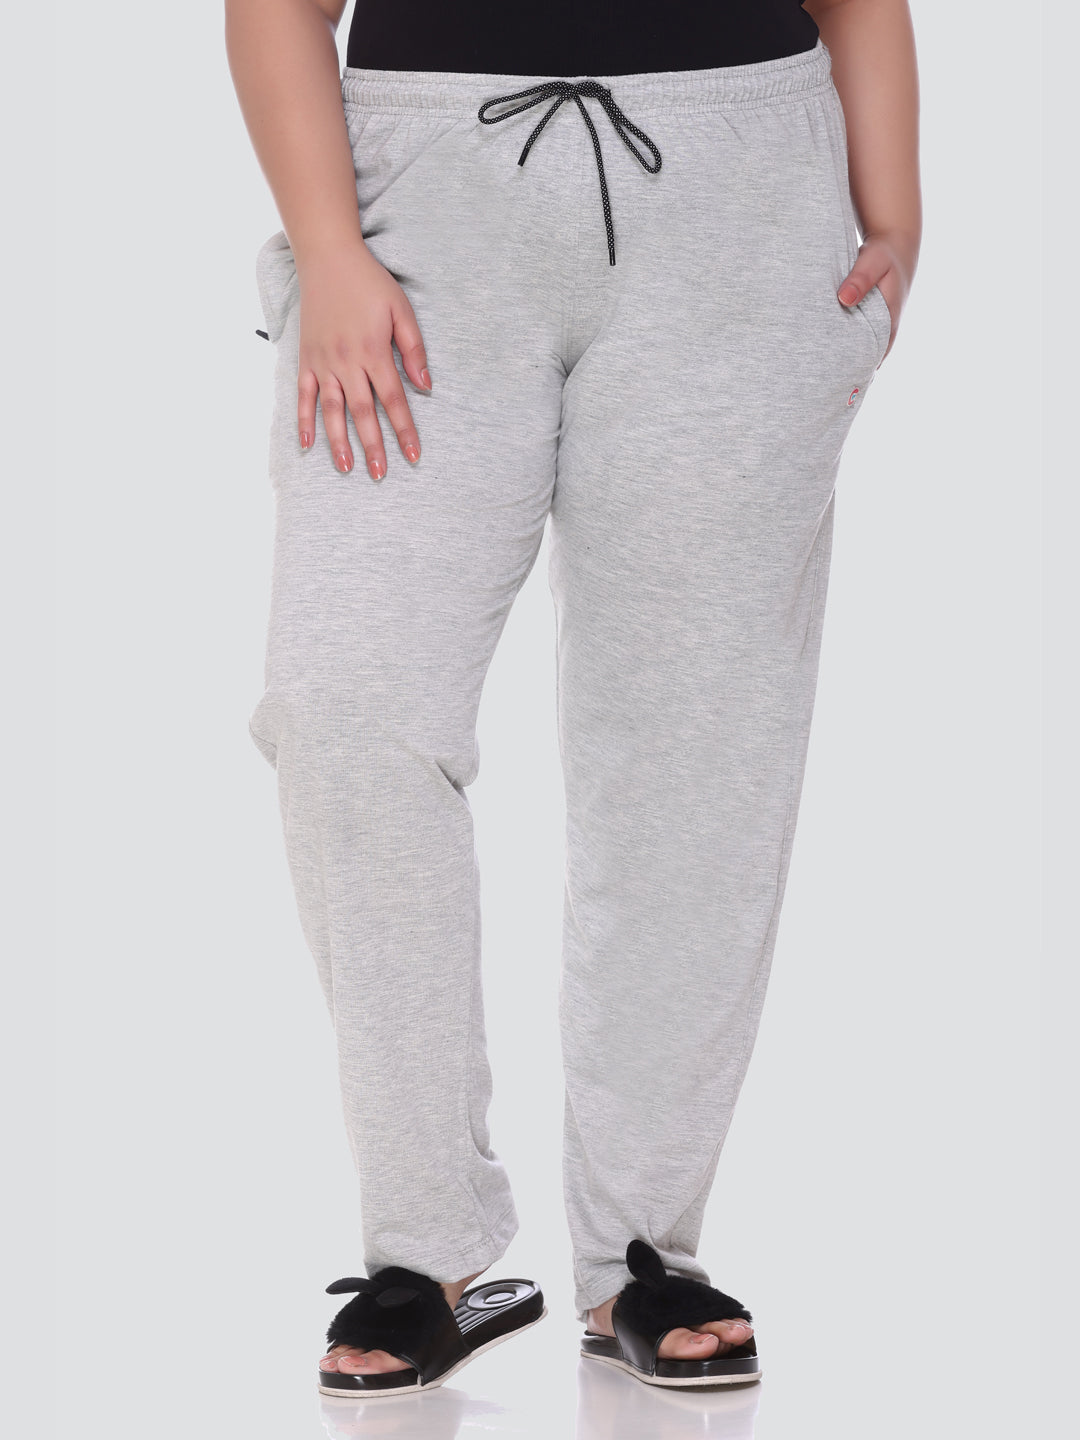 Plus Size Cotton Track Pants For Women - Grey